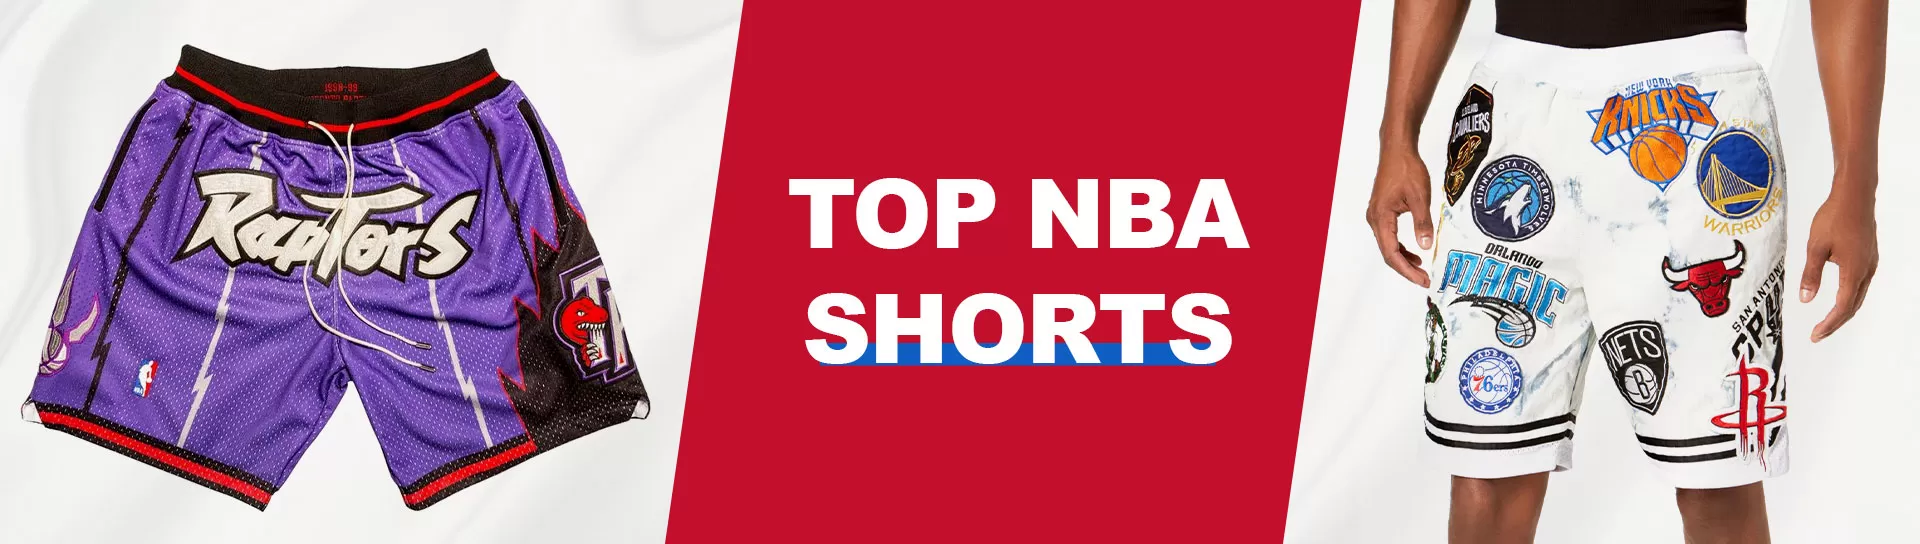 Banner-Top NBA Shorts-pc - dunkjerseys